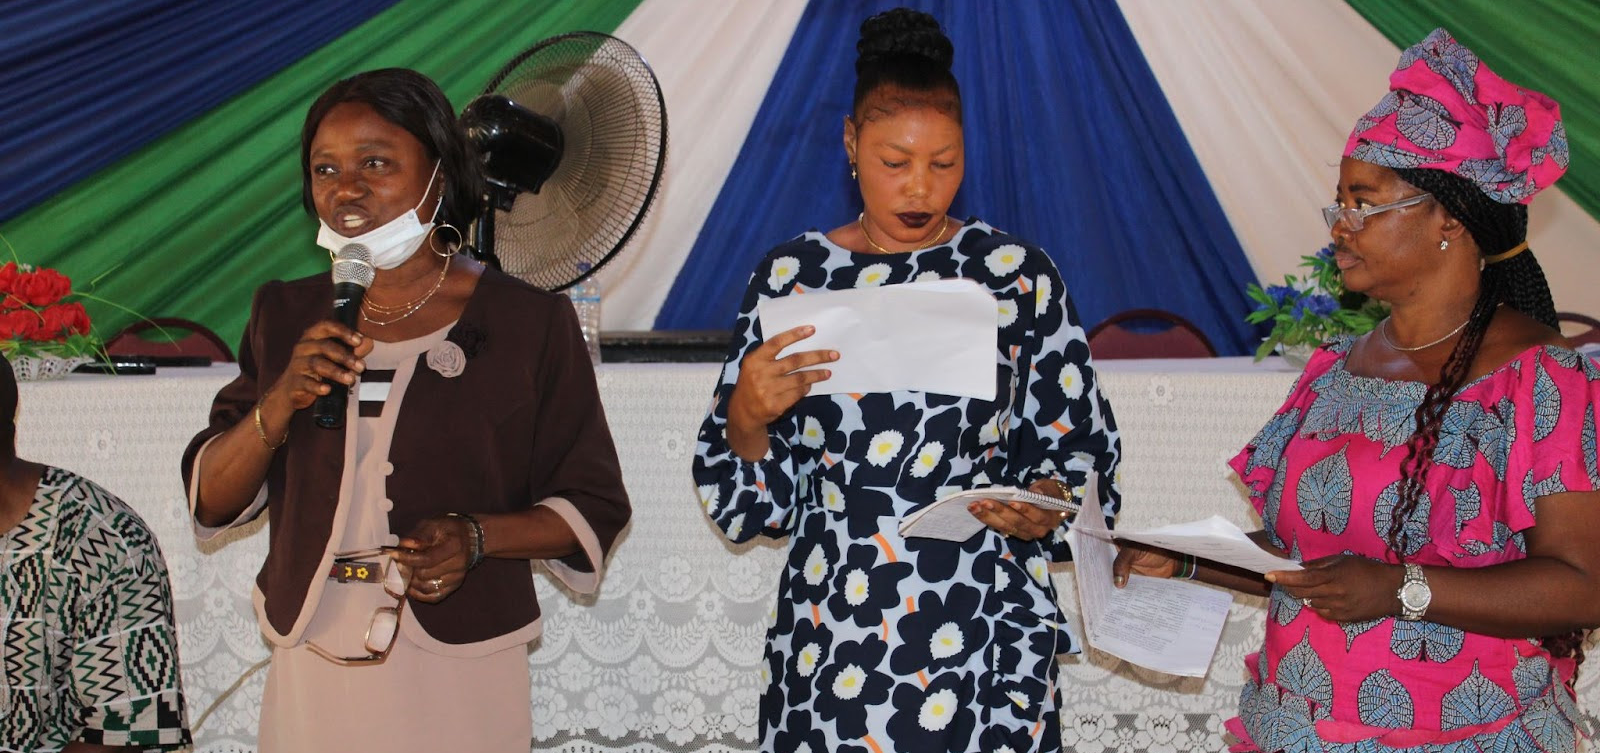 Sierra Leone: A groundbreaking gender equality bill passes